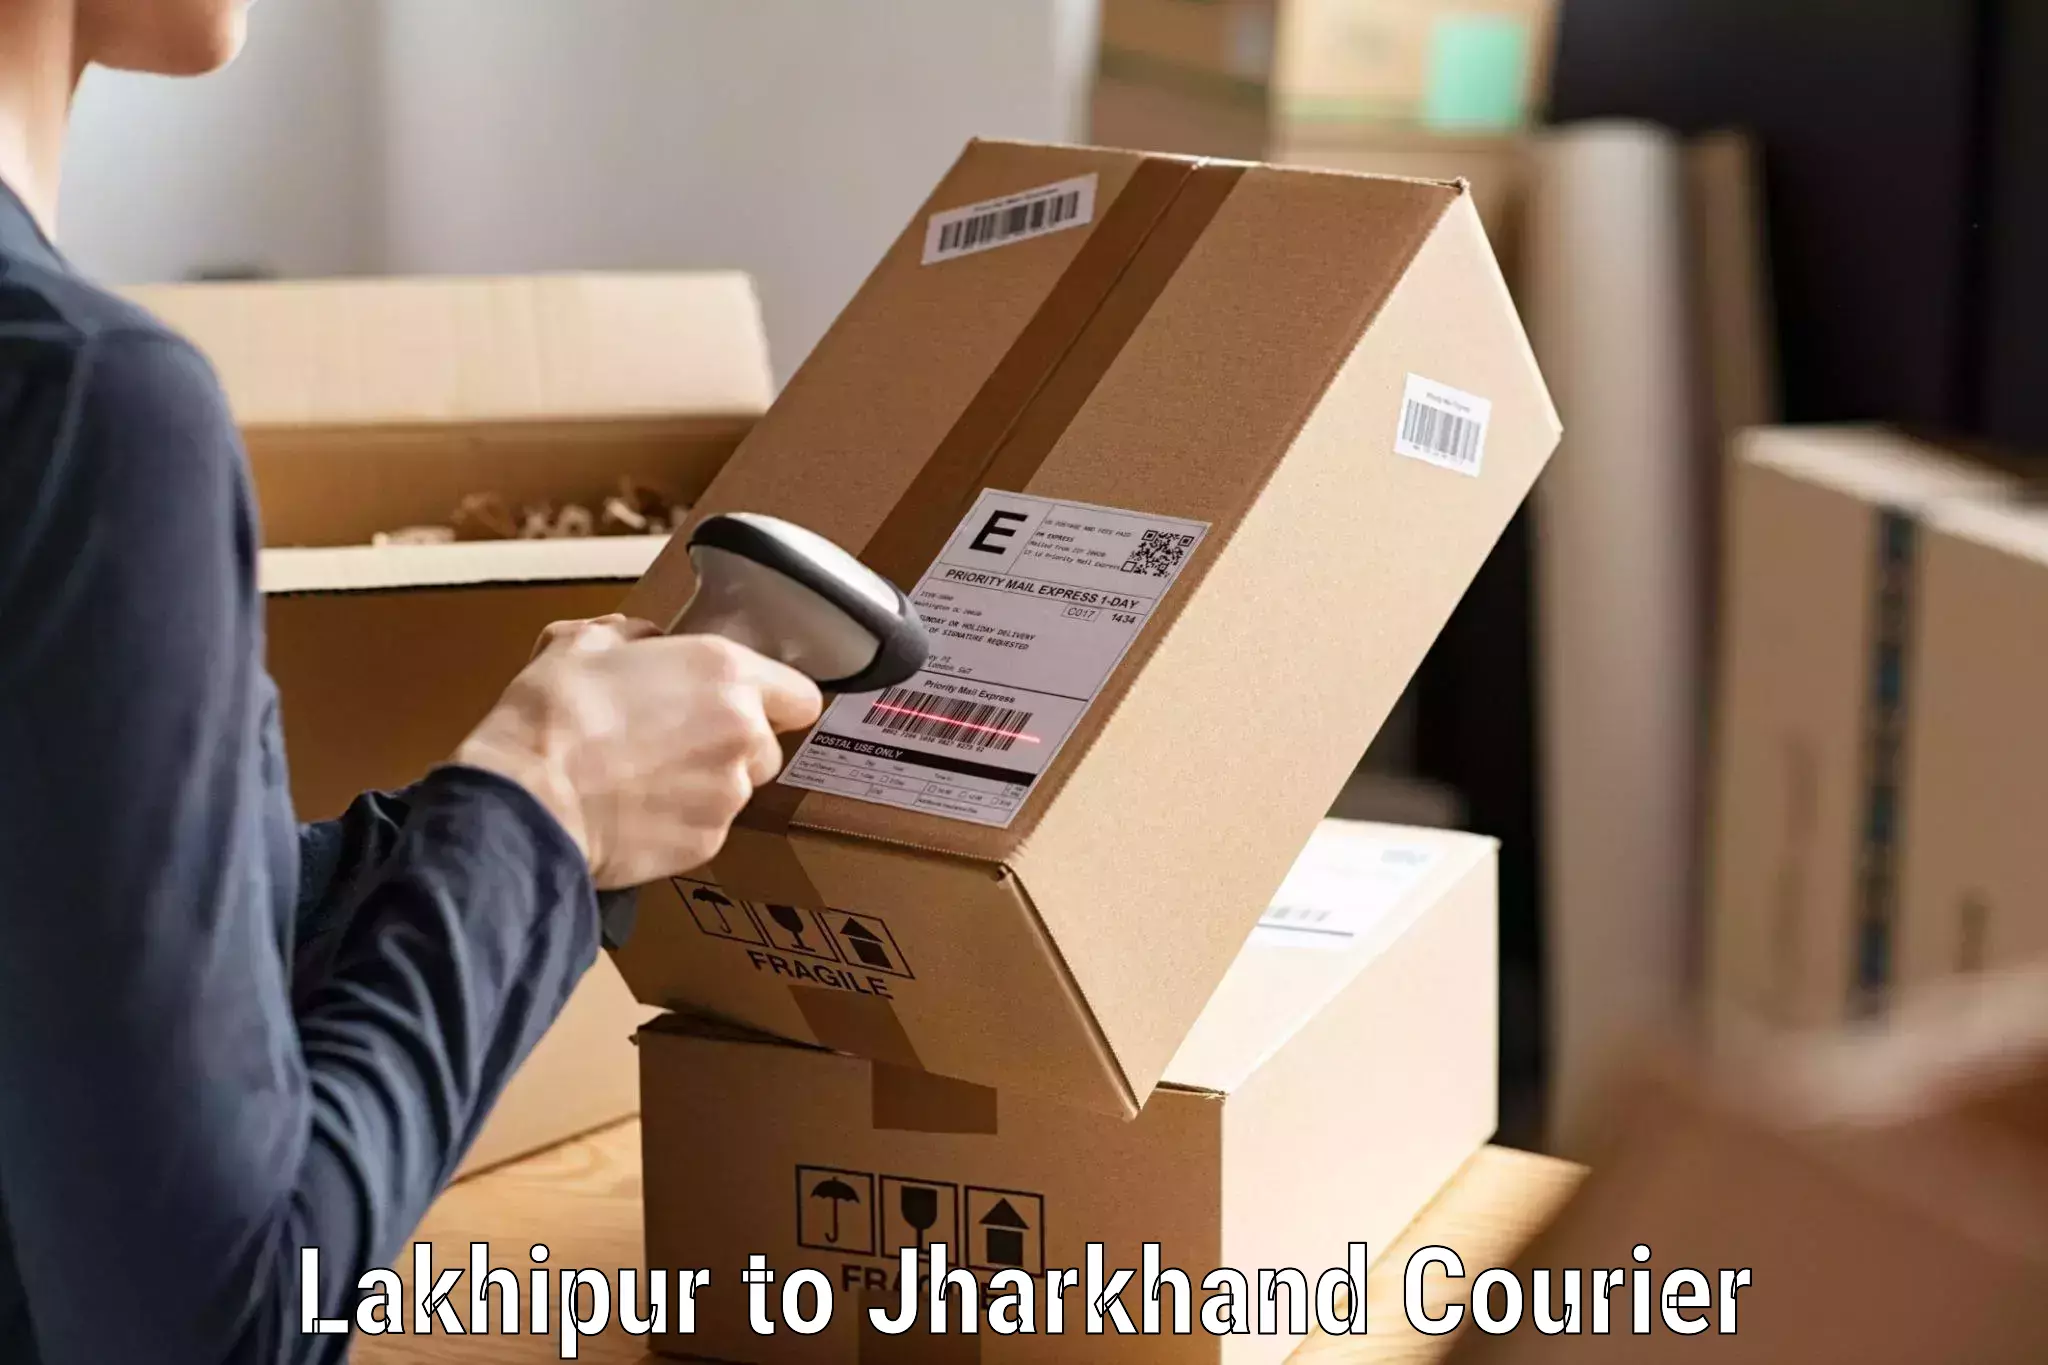 Global shipping solutions Lakhipur to Bokaro